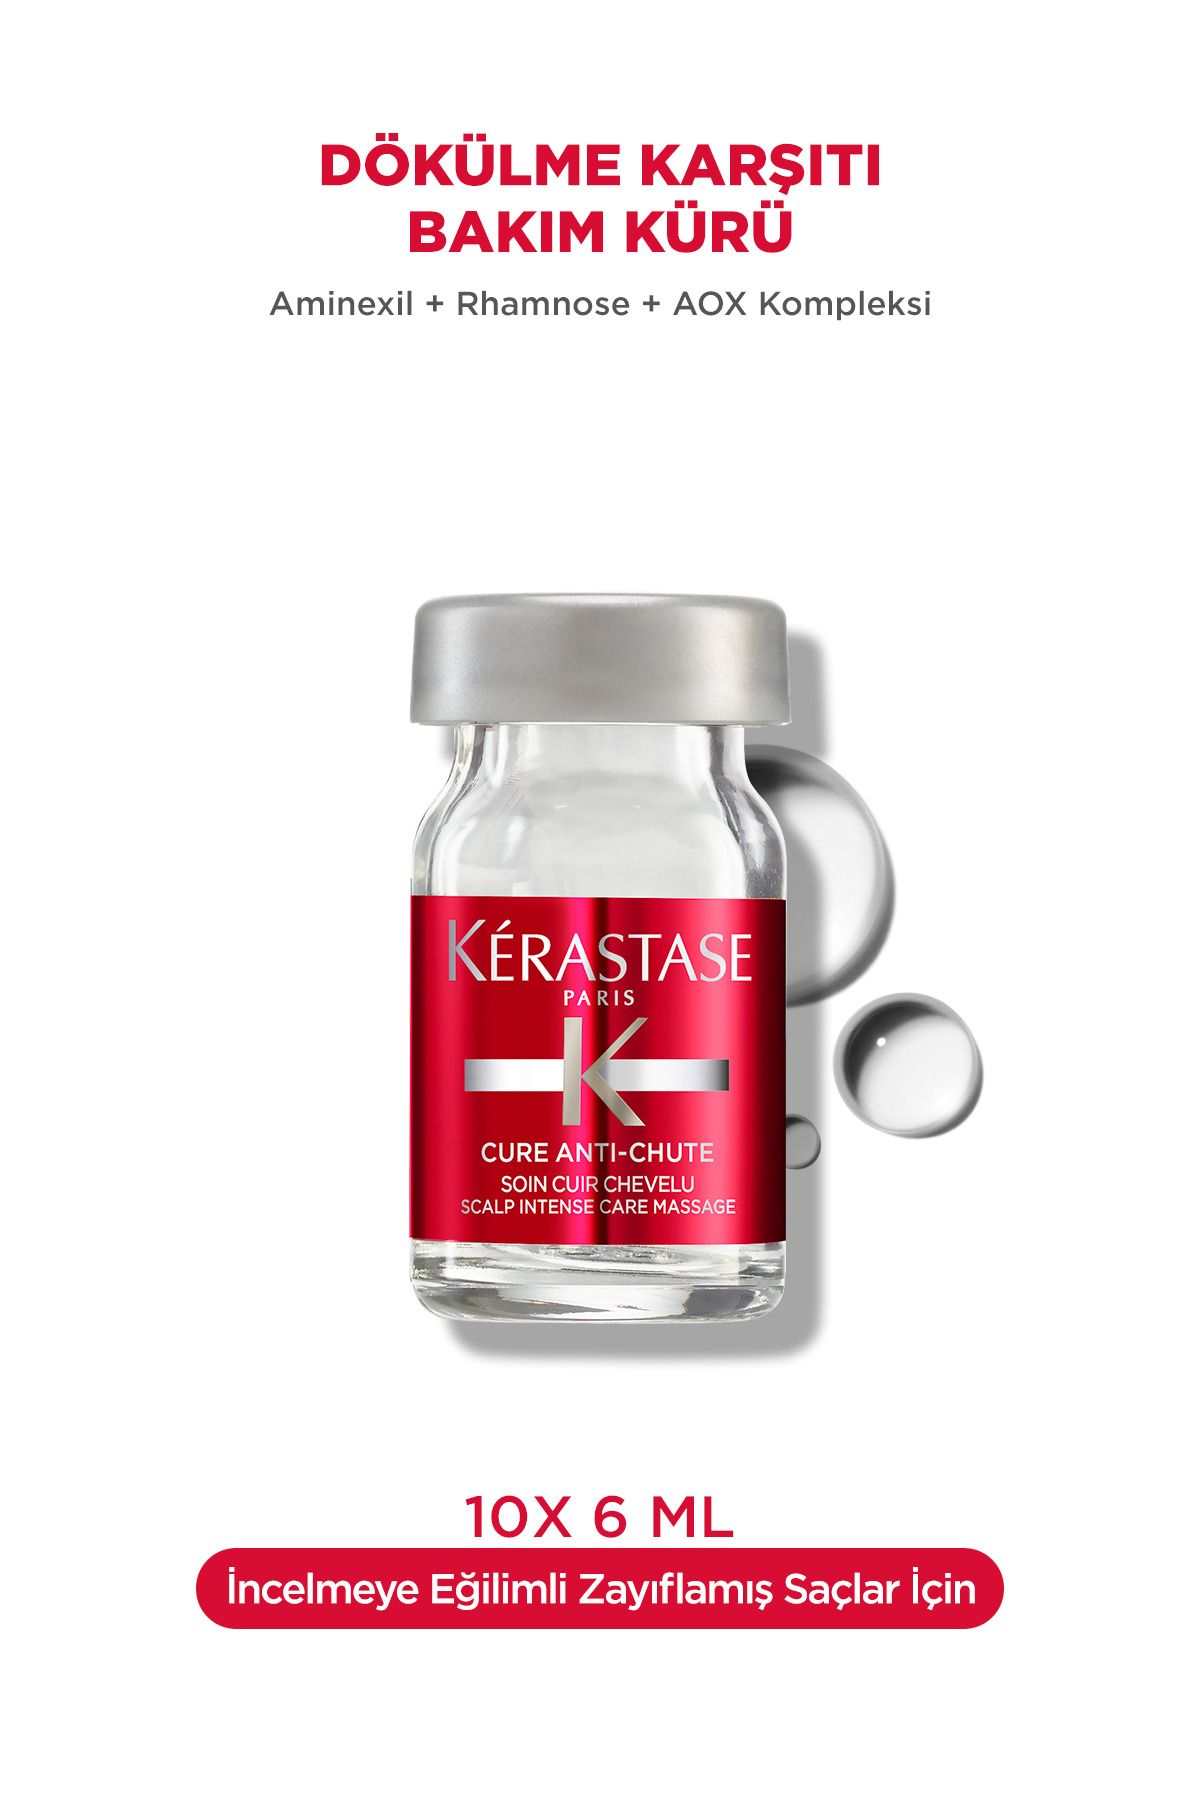 سرم درمانی Specfique Cure ضد ریزش مو‌ 60میل کراستاس Kerastase